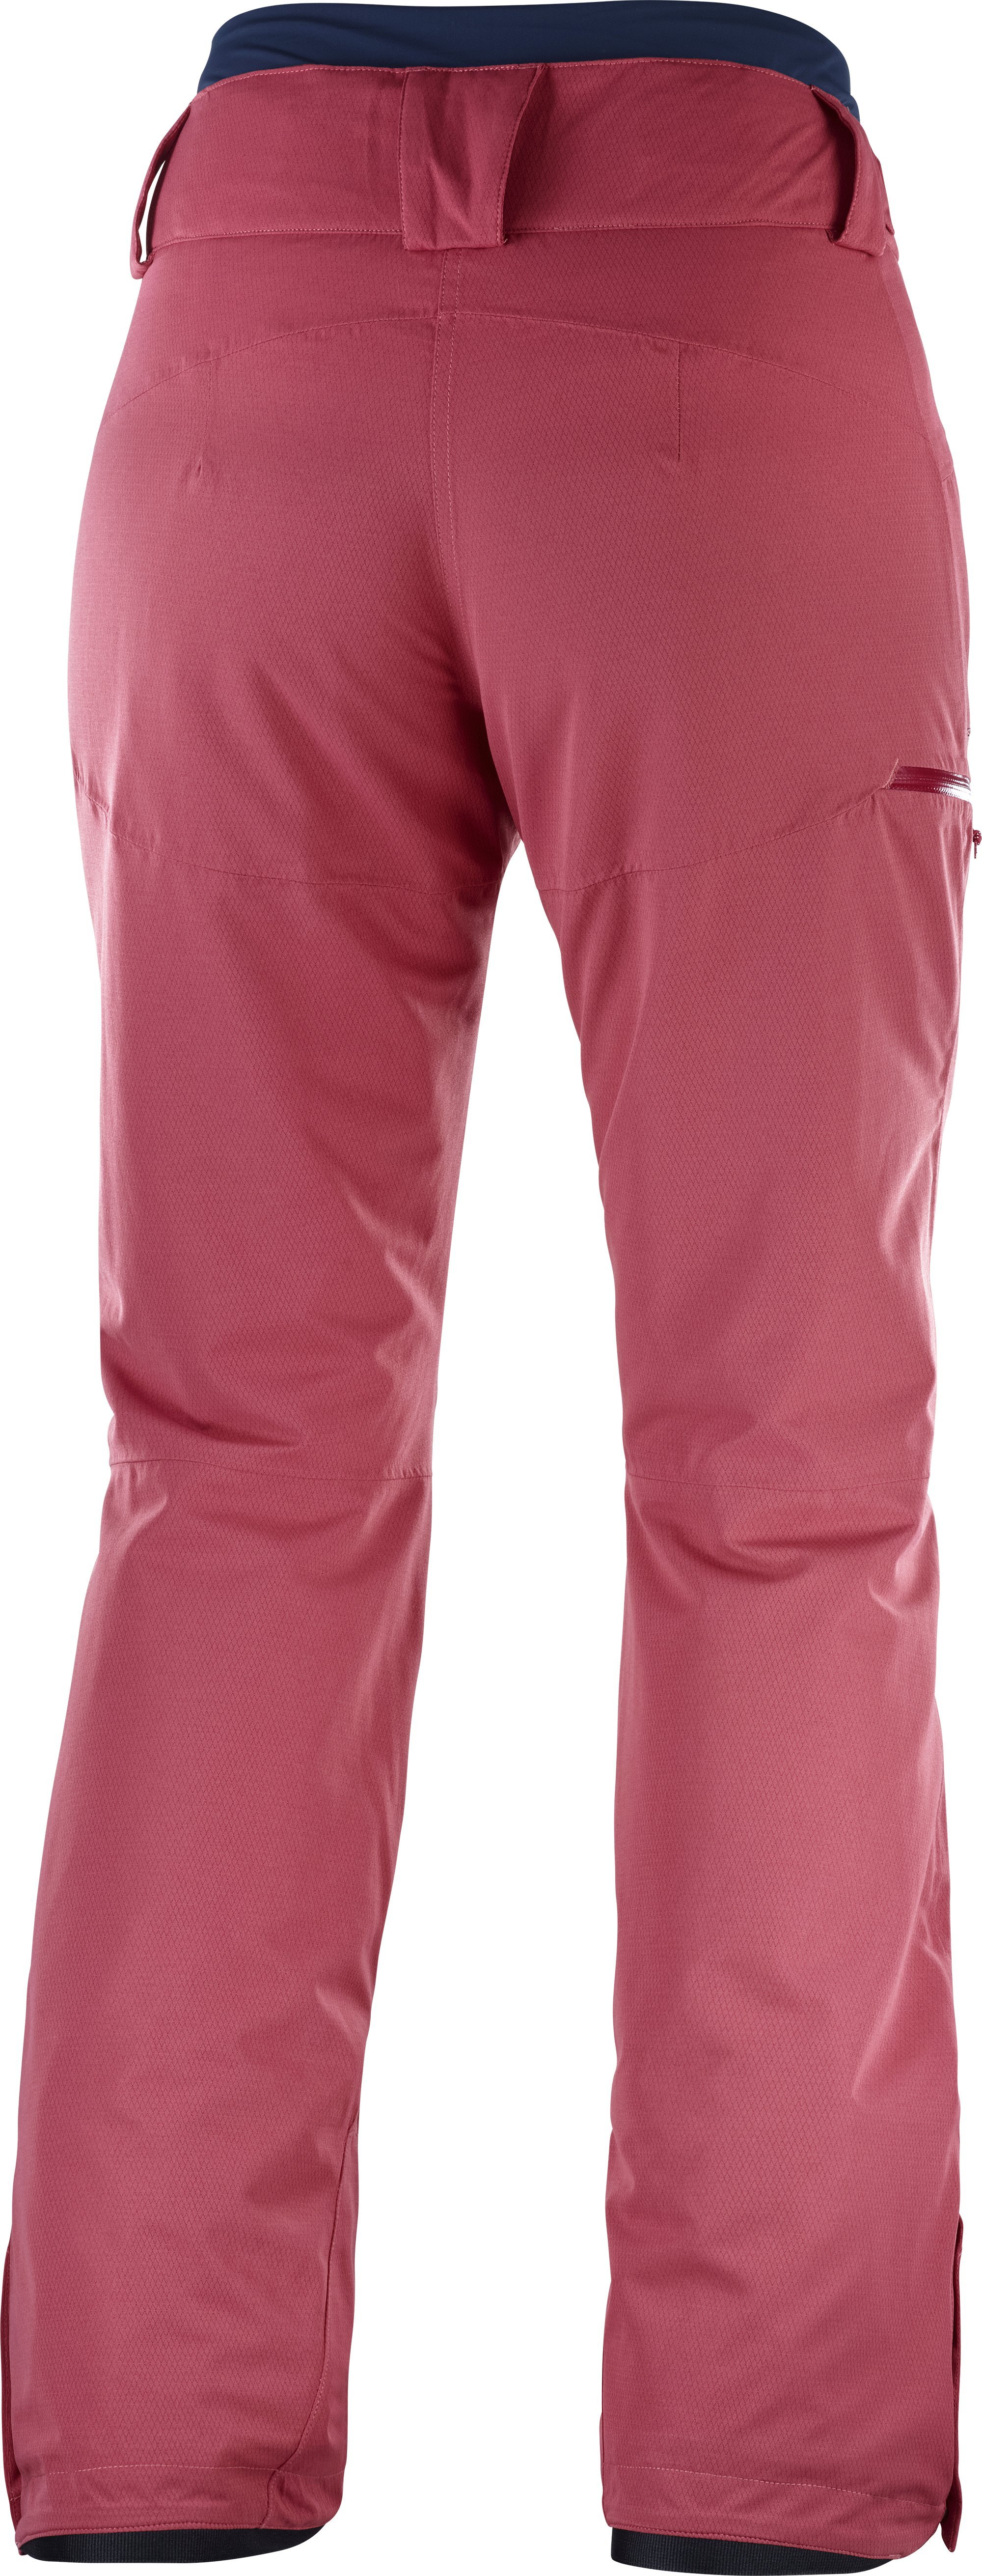 Lyžiarske nohavice Salomon QST Snow Pant W - ružová